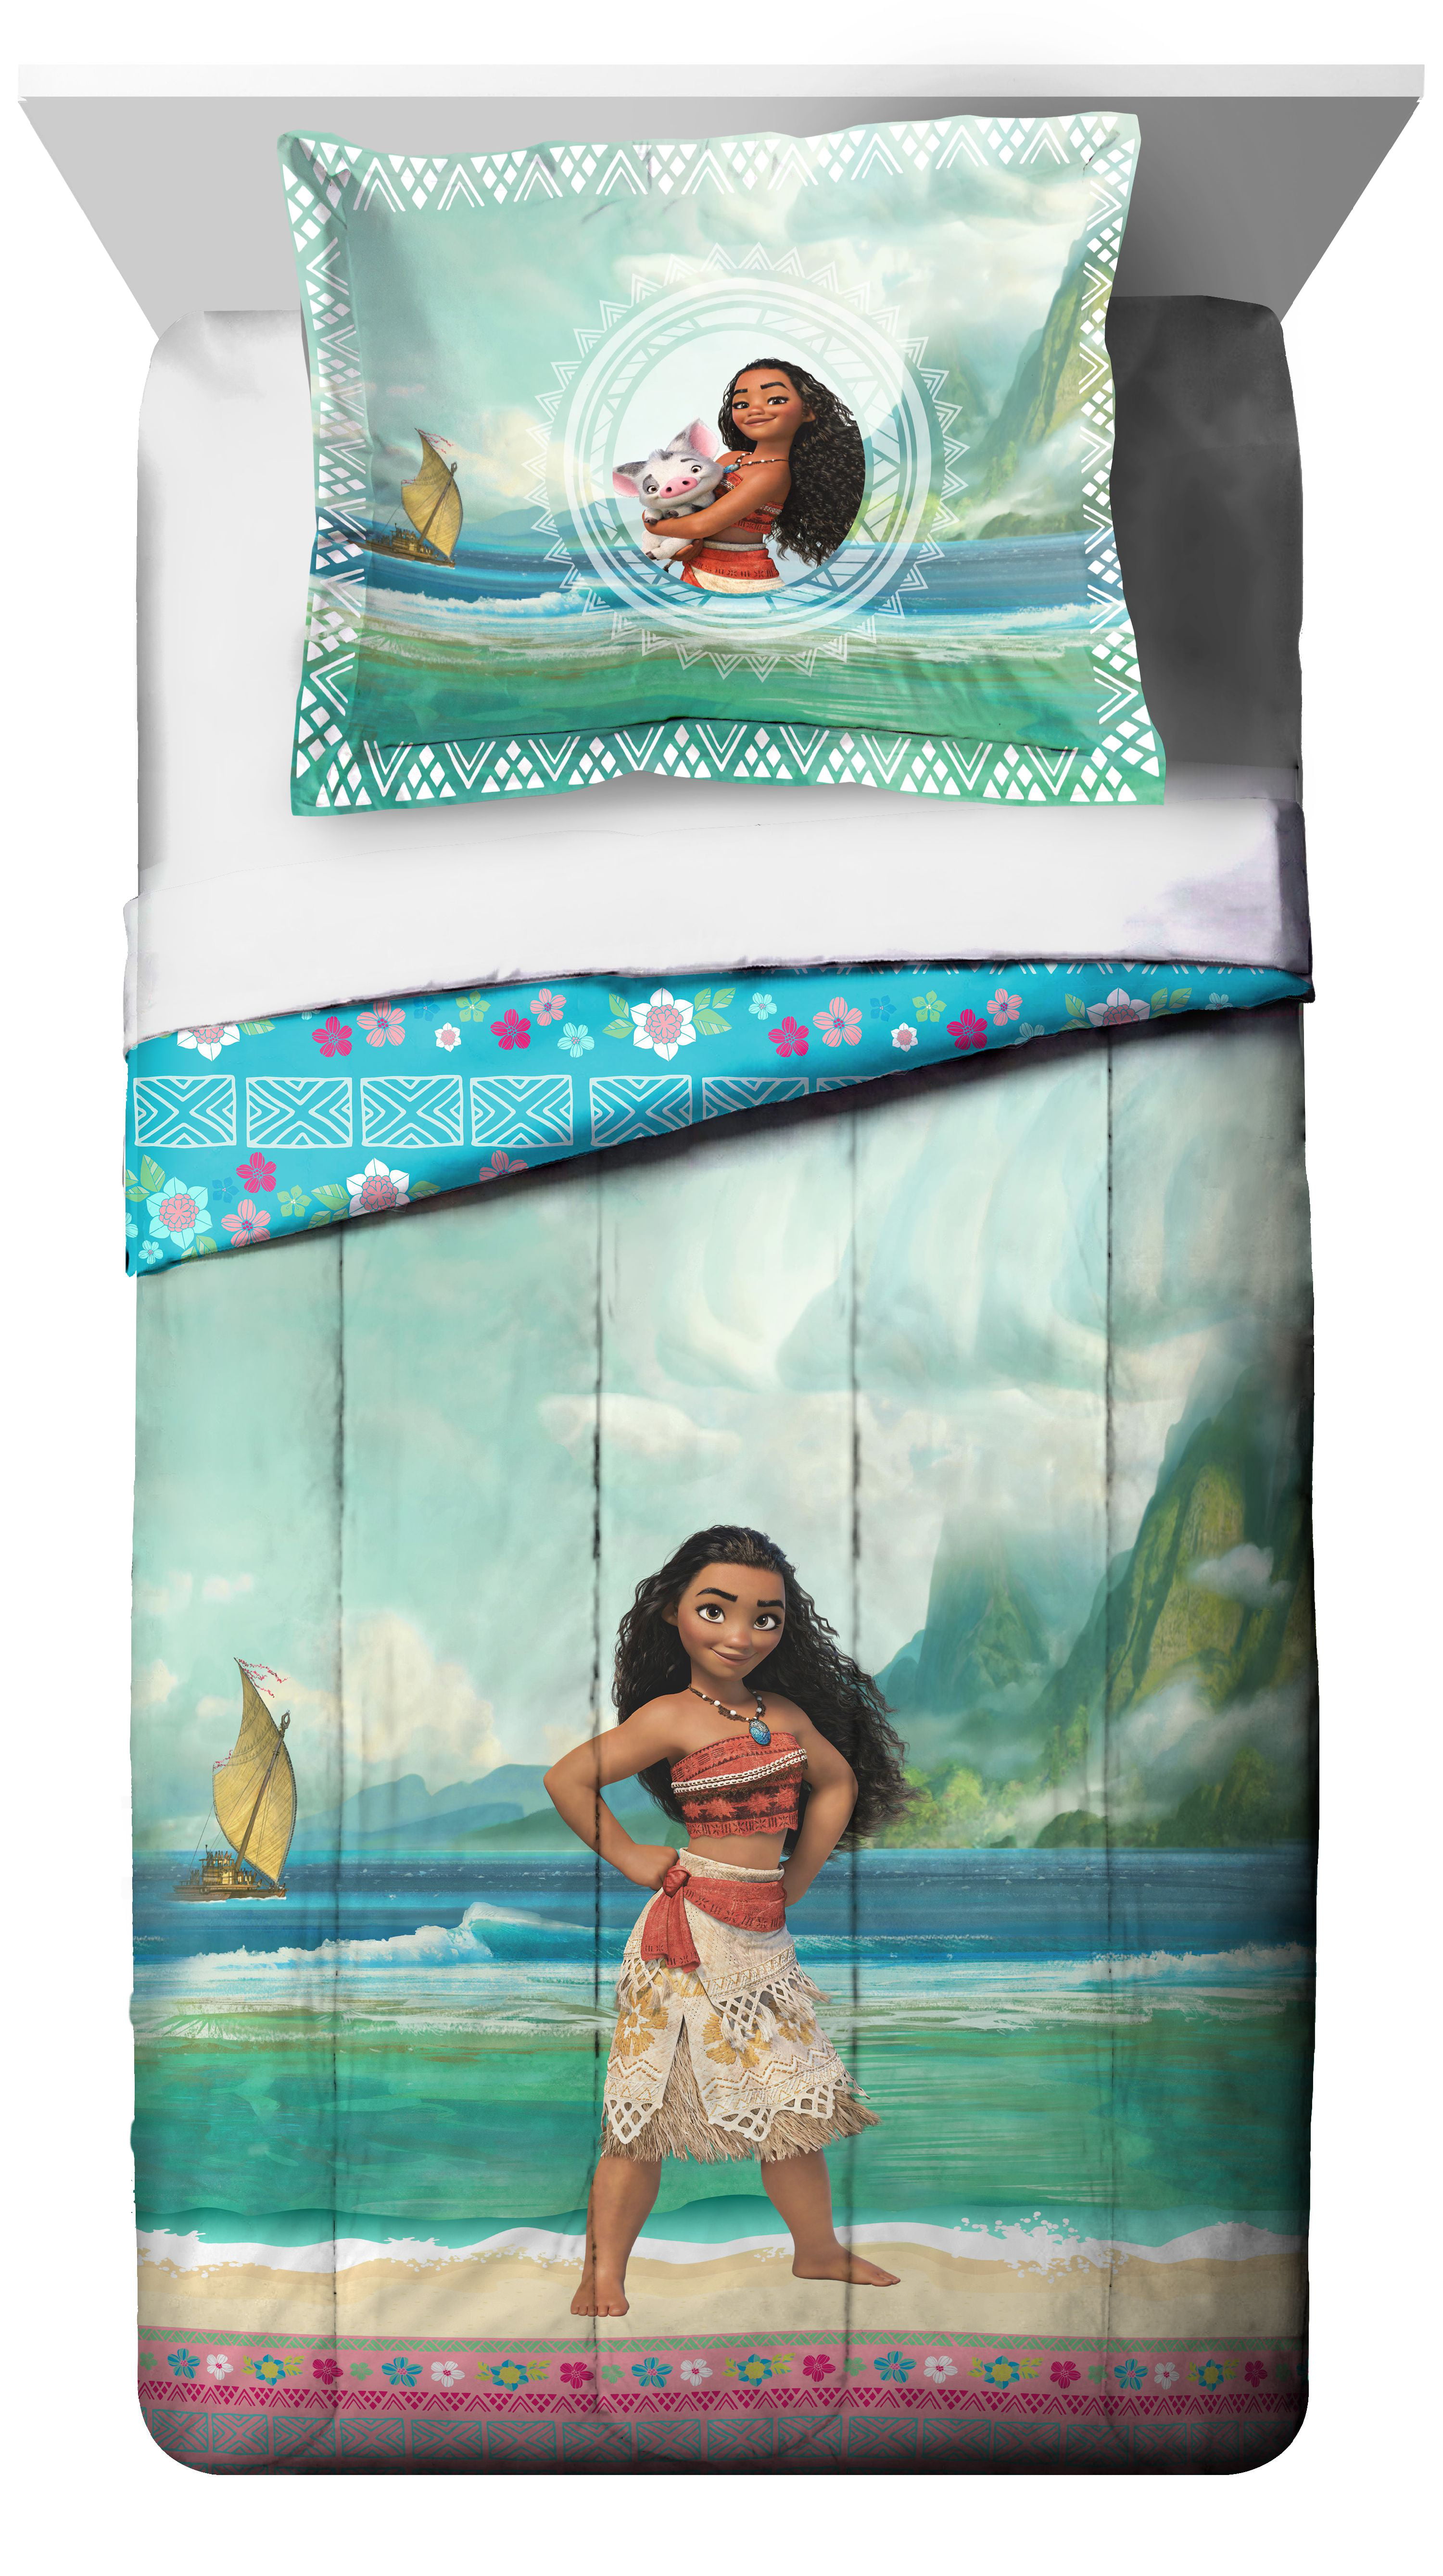 Never Opened Brand New Full 2 piece Comforter Set Disney's Moana Twin 